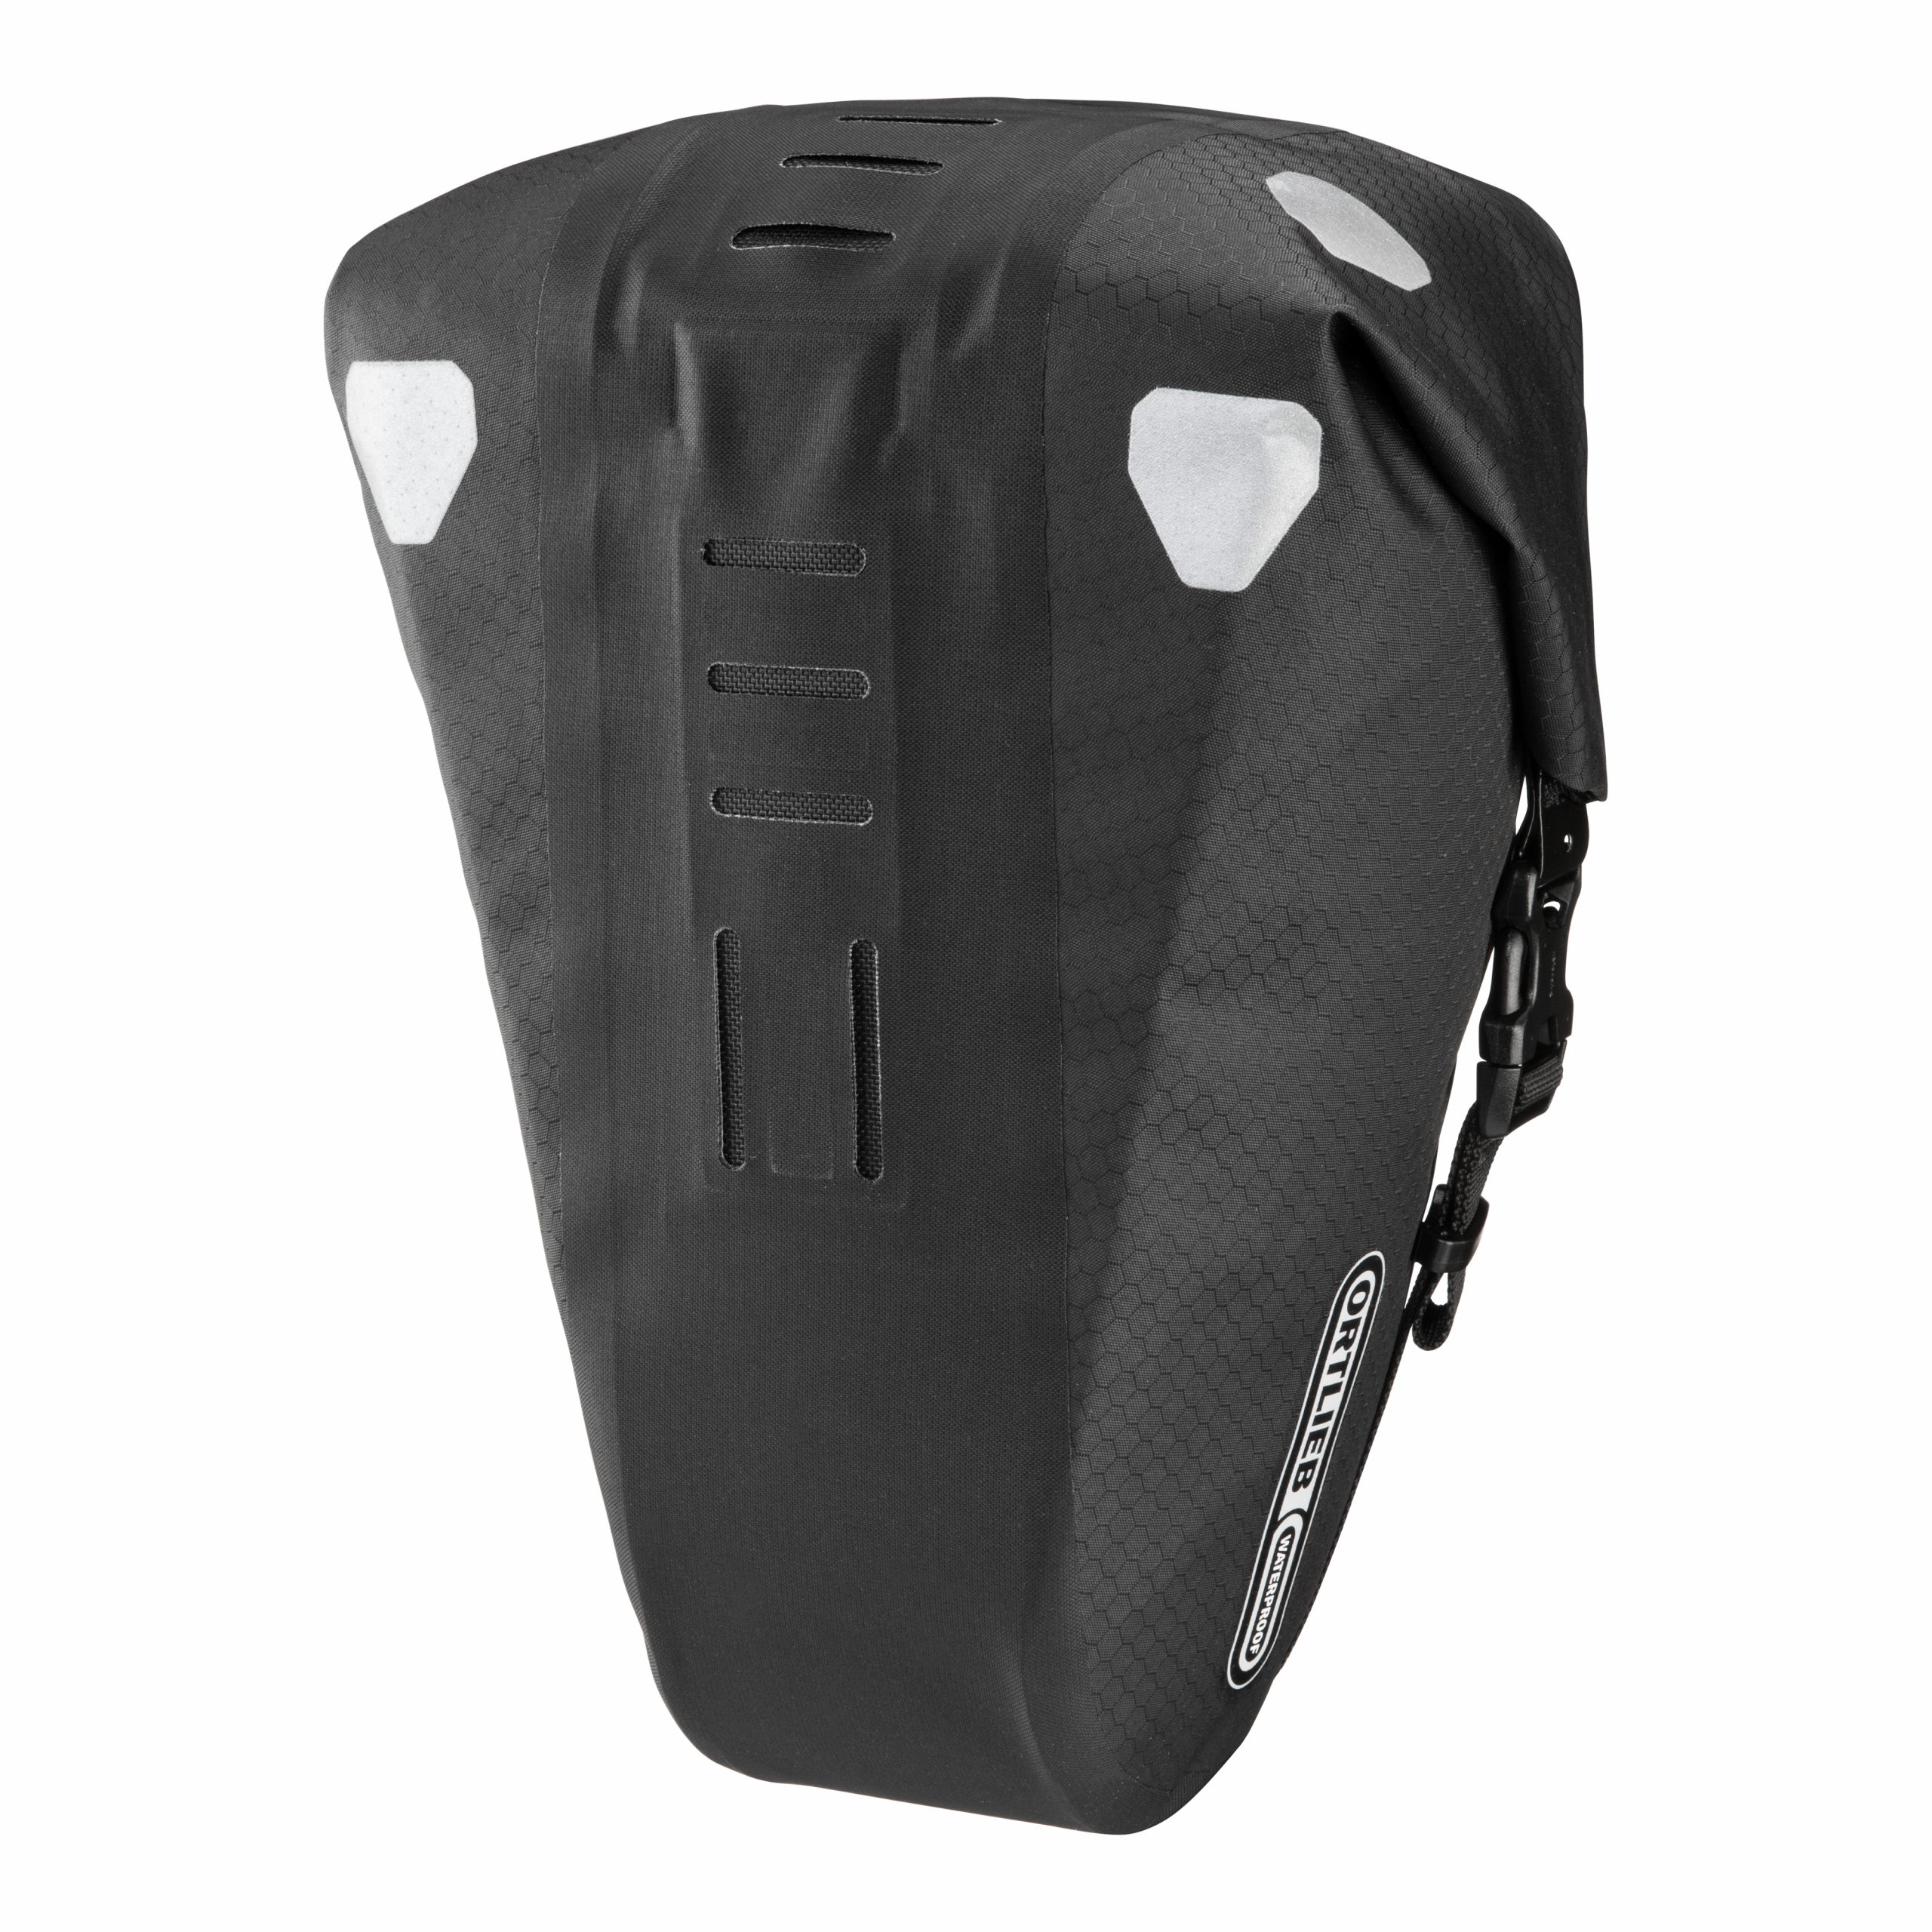 Ortlieb orbpsp02 bikepacking saddle bag f990202 limited edition seat